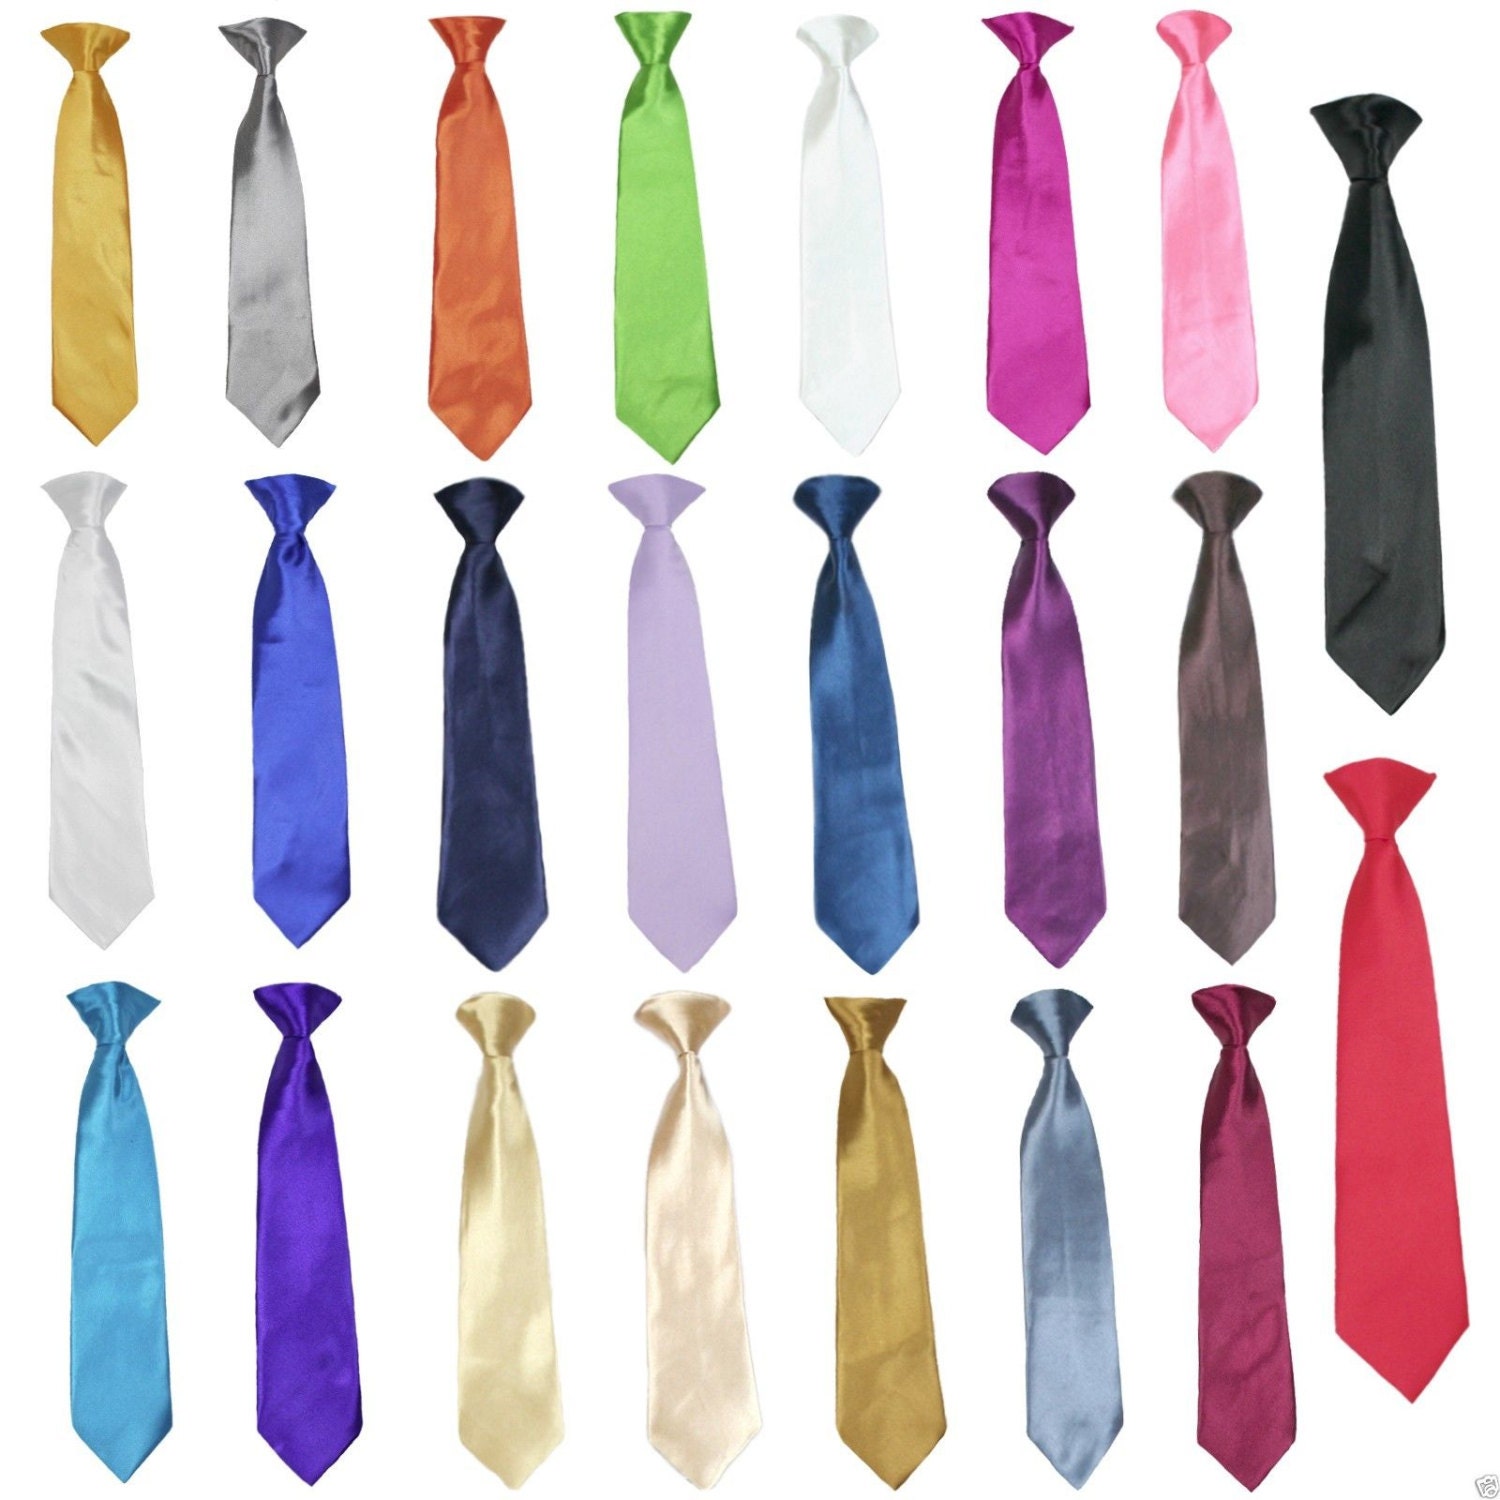 NBLYOS 1 Pack Boys Neck Tie Adjustable Zipper Necktie for Kids